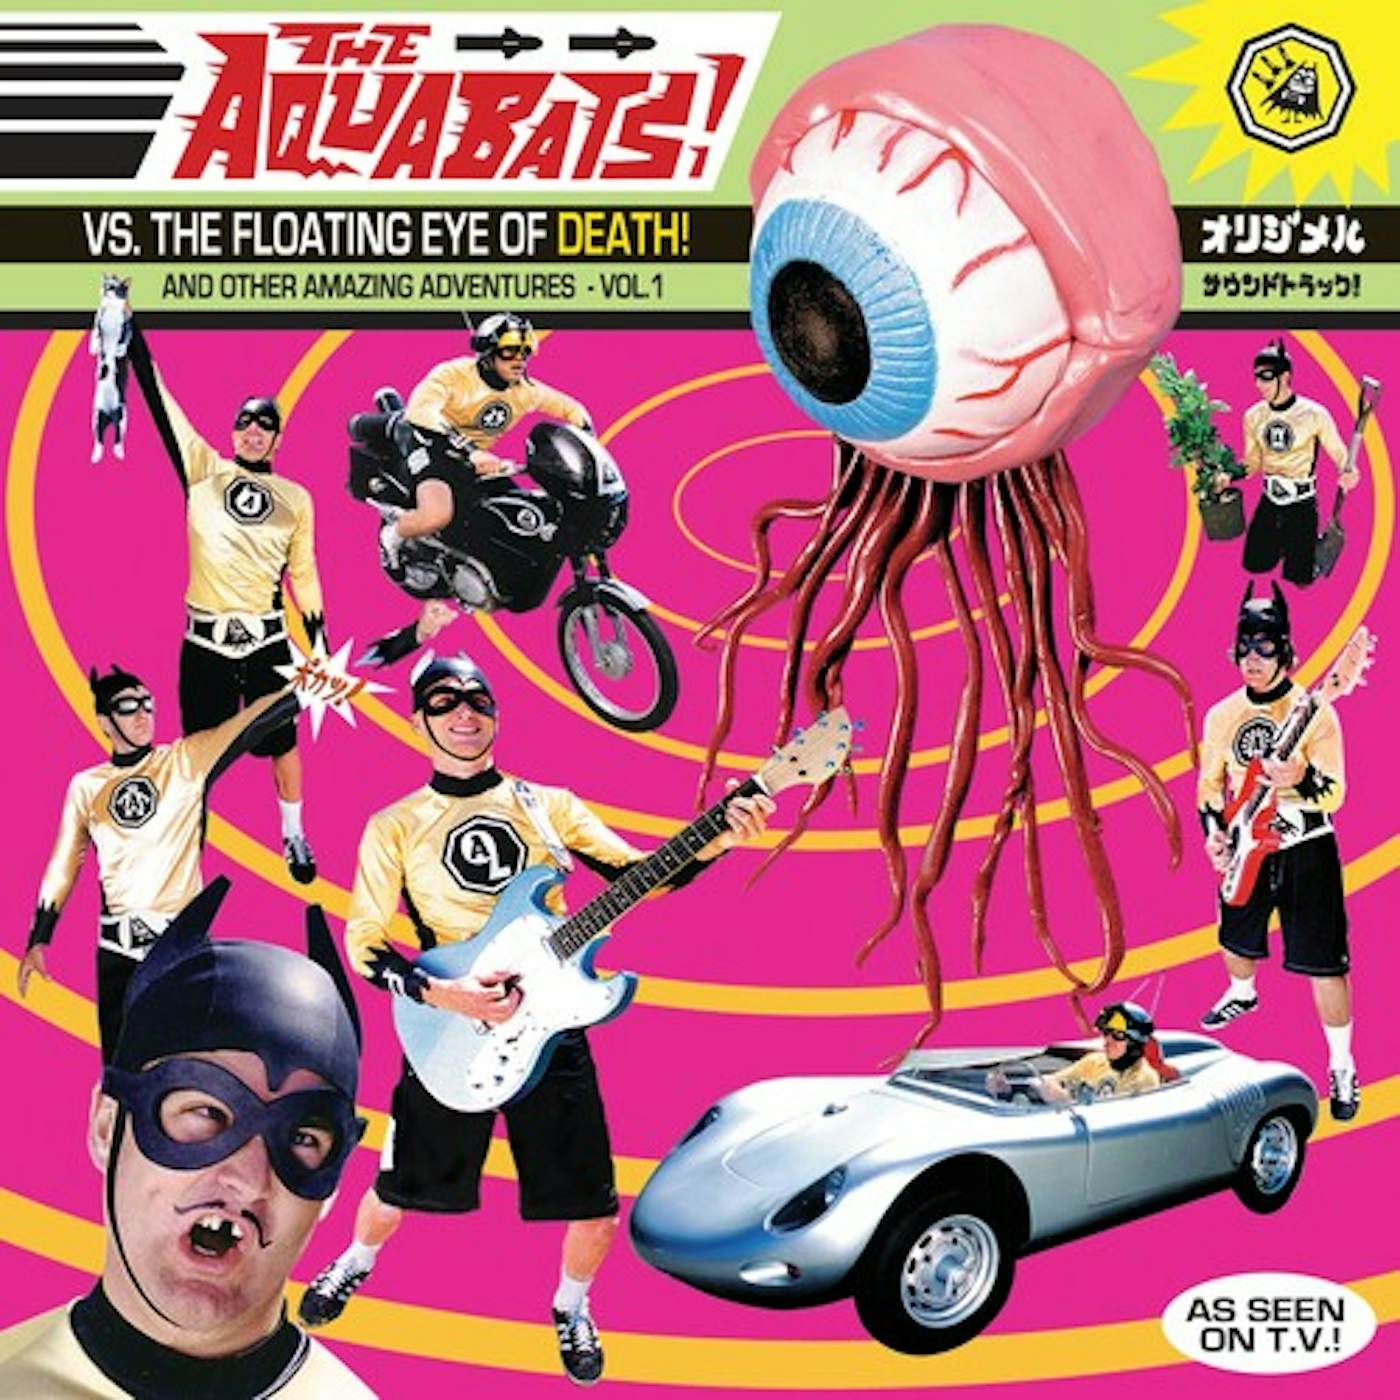 The Aquabats! VS. THE FLOATING EYE OF DEATH Vinyl Record